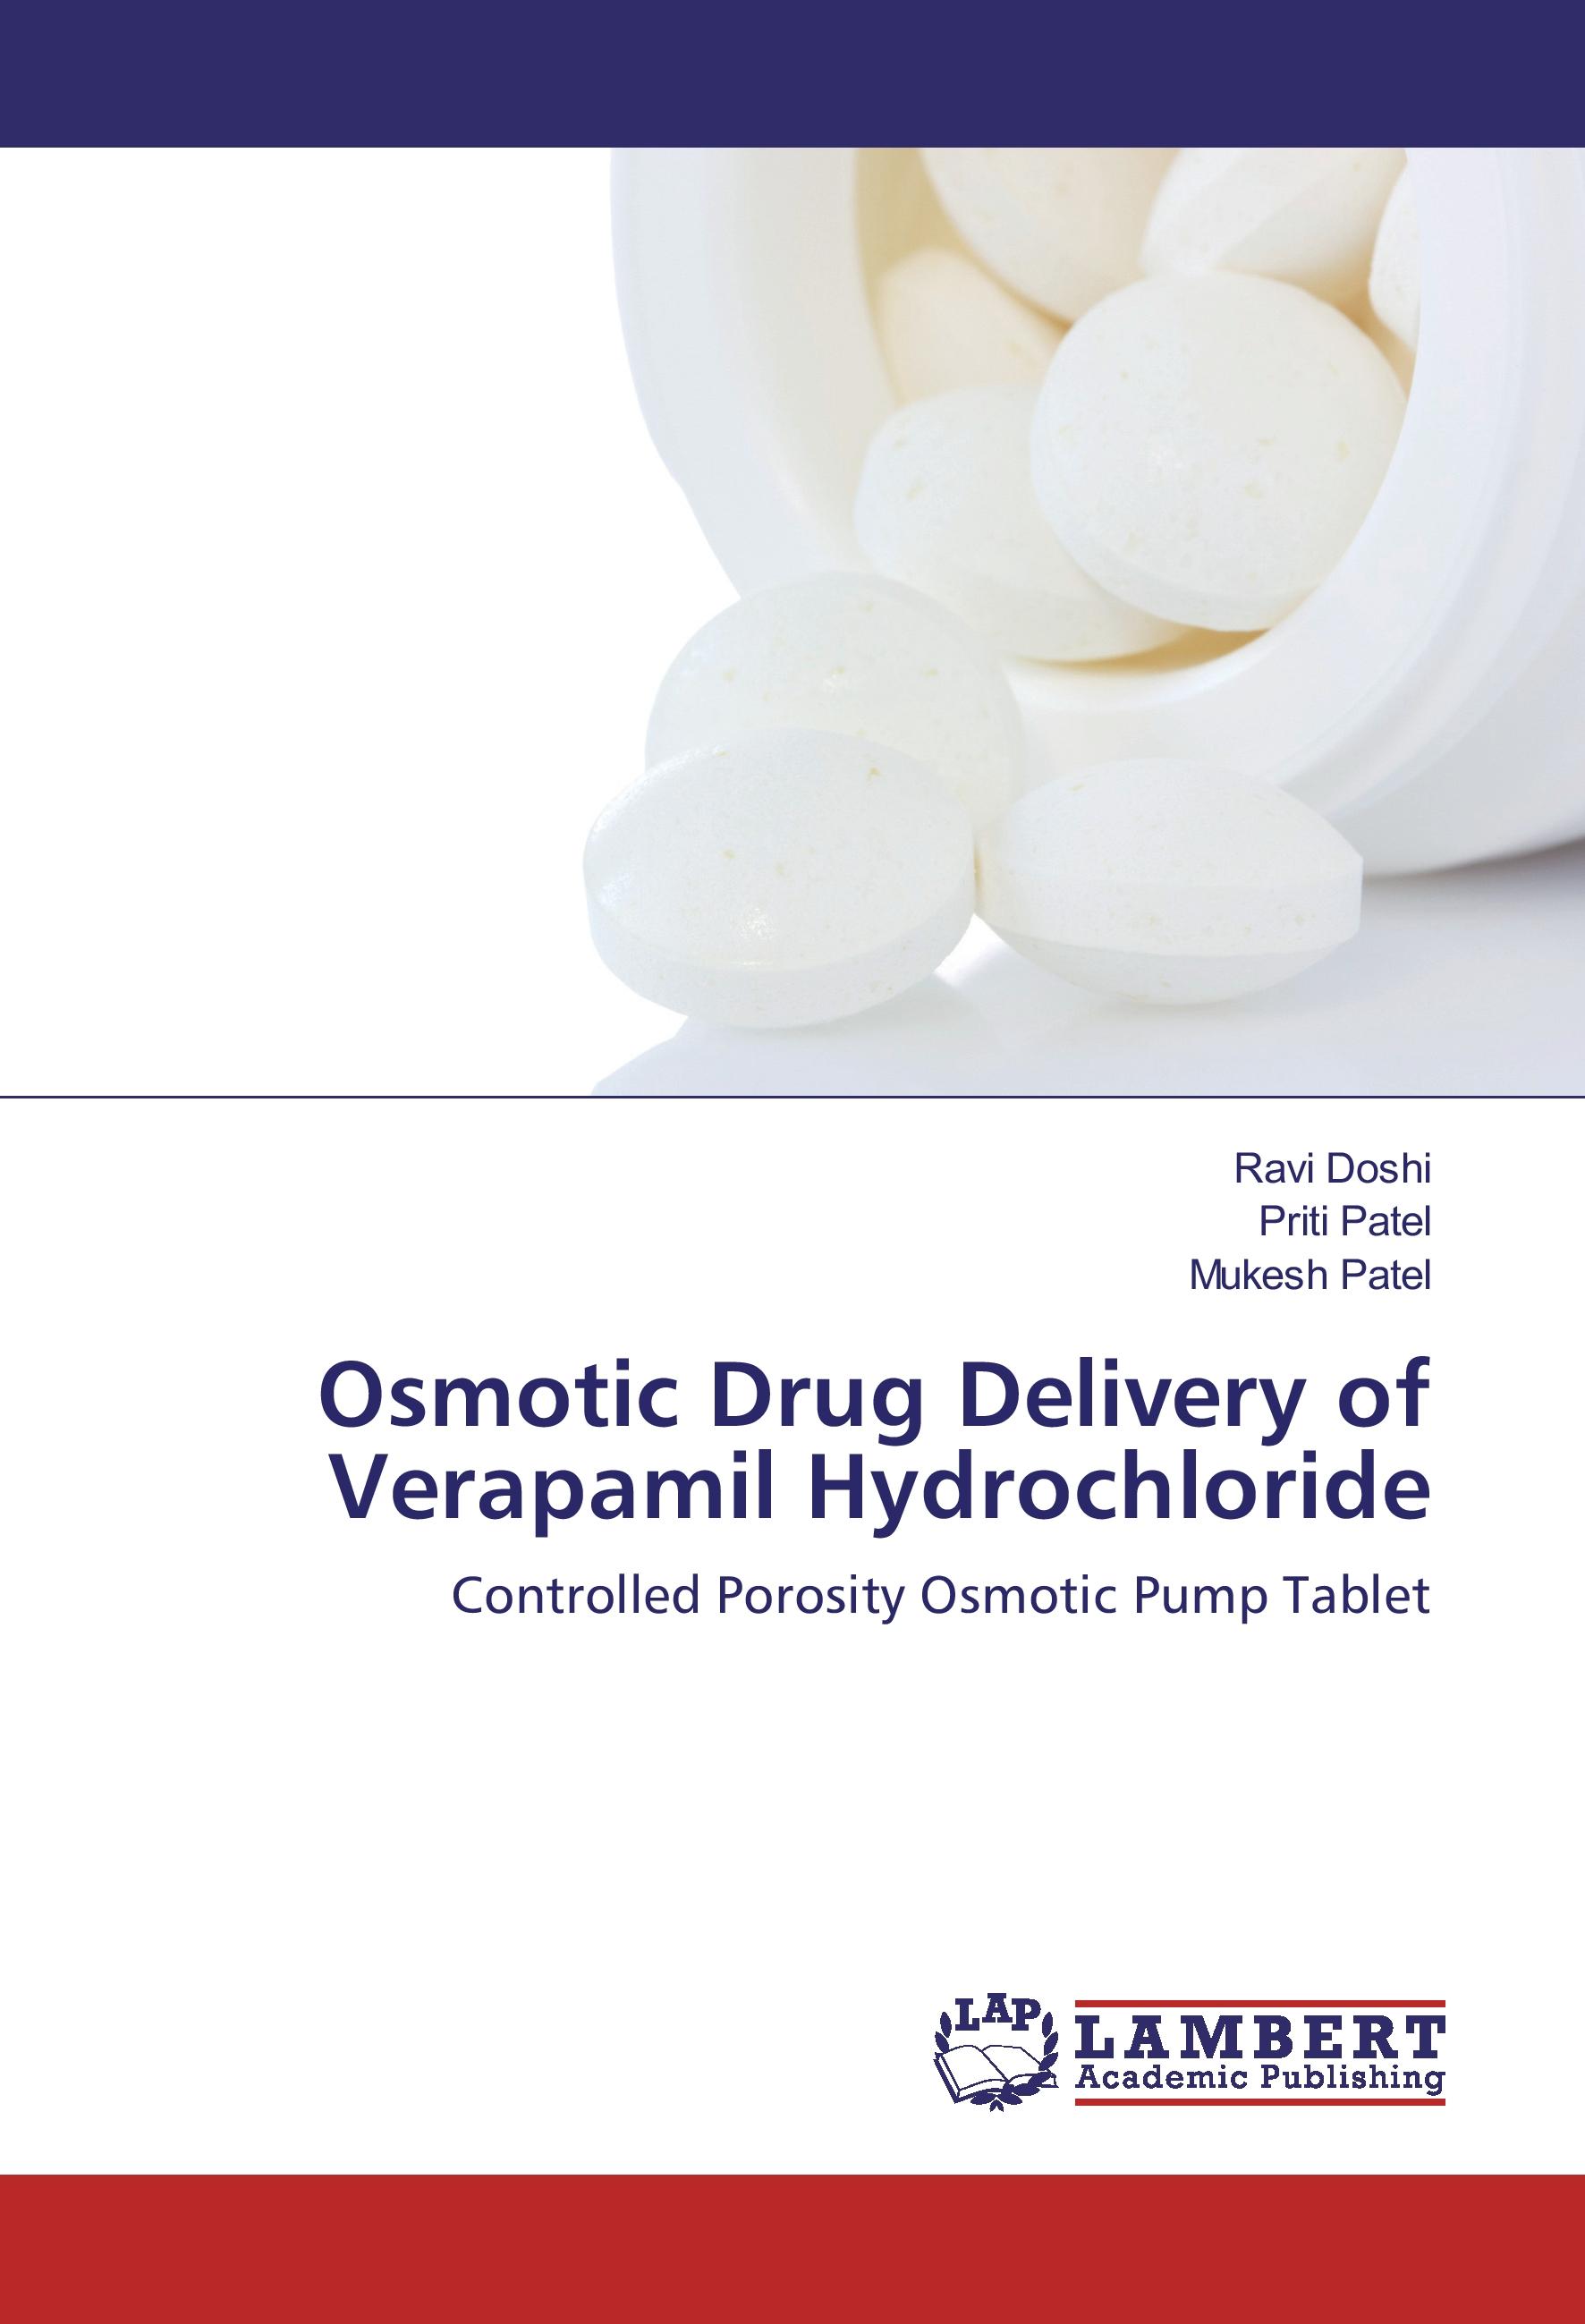 Osmotic Drug Delivery of Verapamil Hydrochloride - Ravi Doshi Priti Patel Mukesh Patel